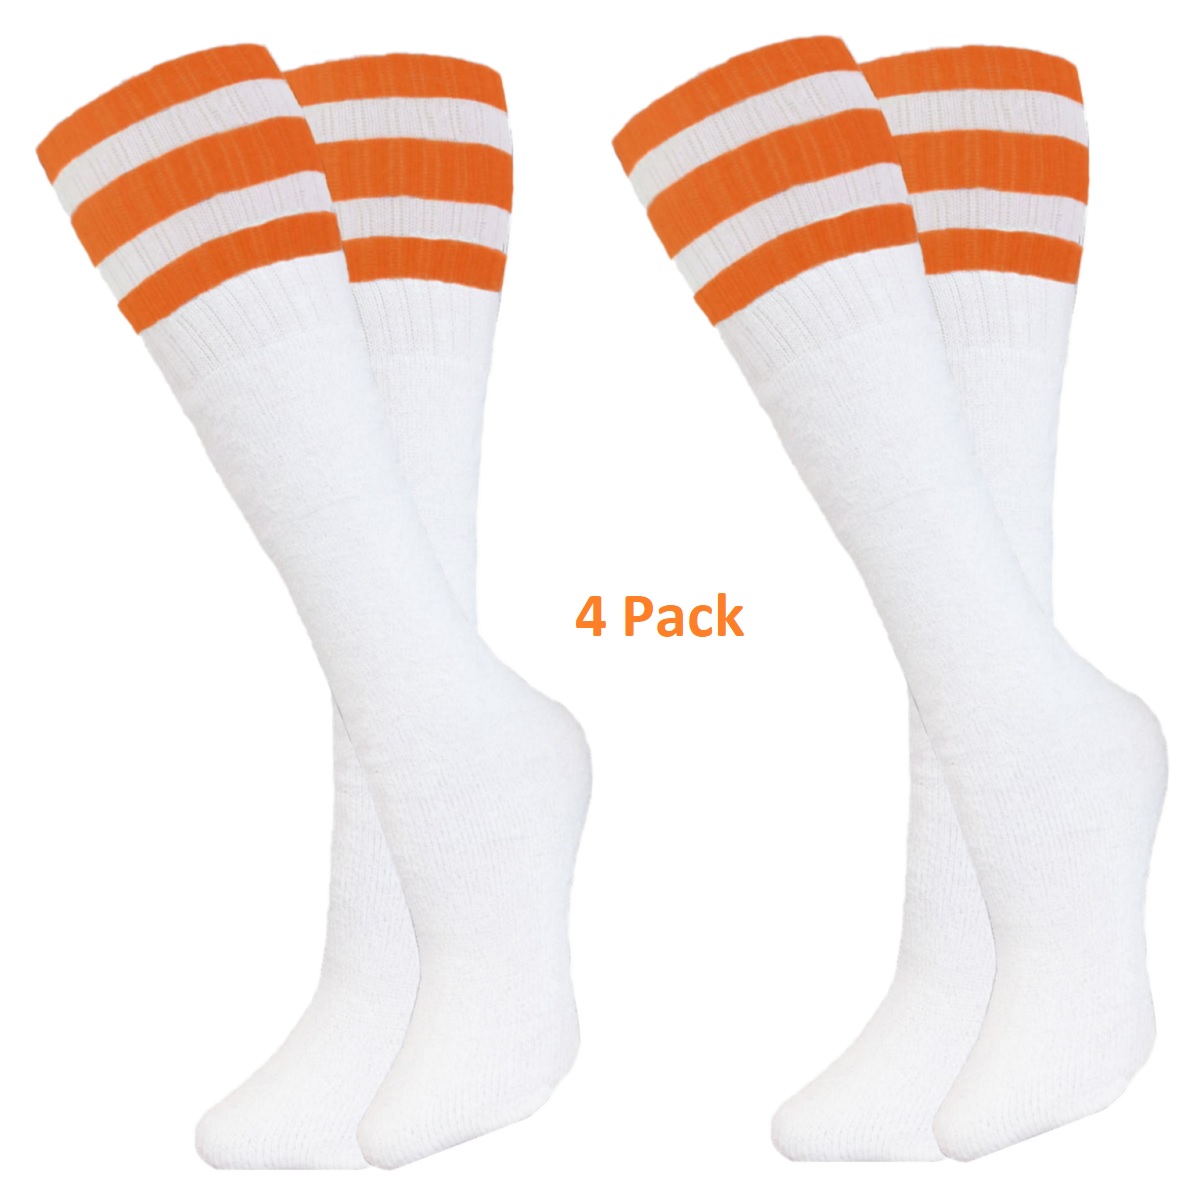 Baseball Softball Striped Tube Socks - White and Orange - set of 4 pairs